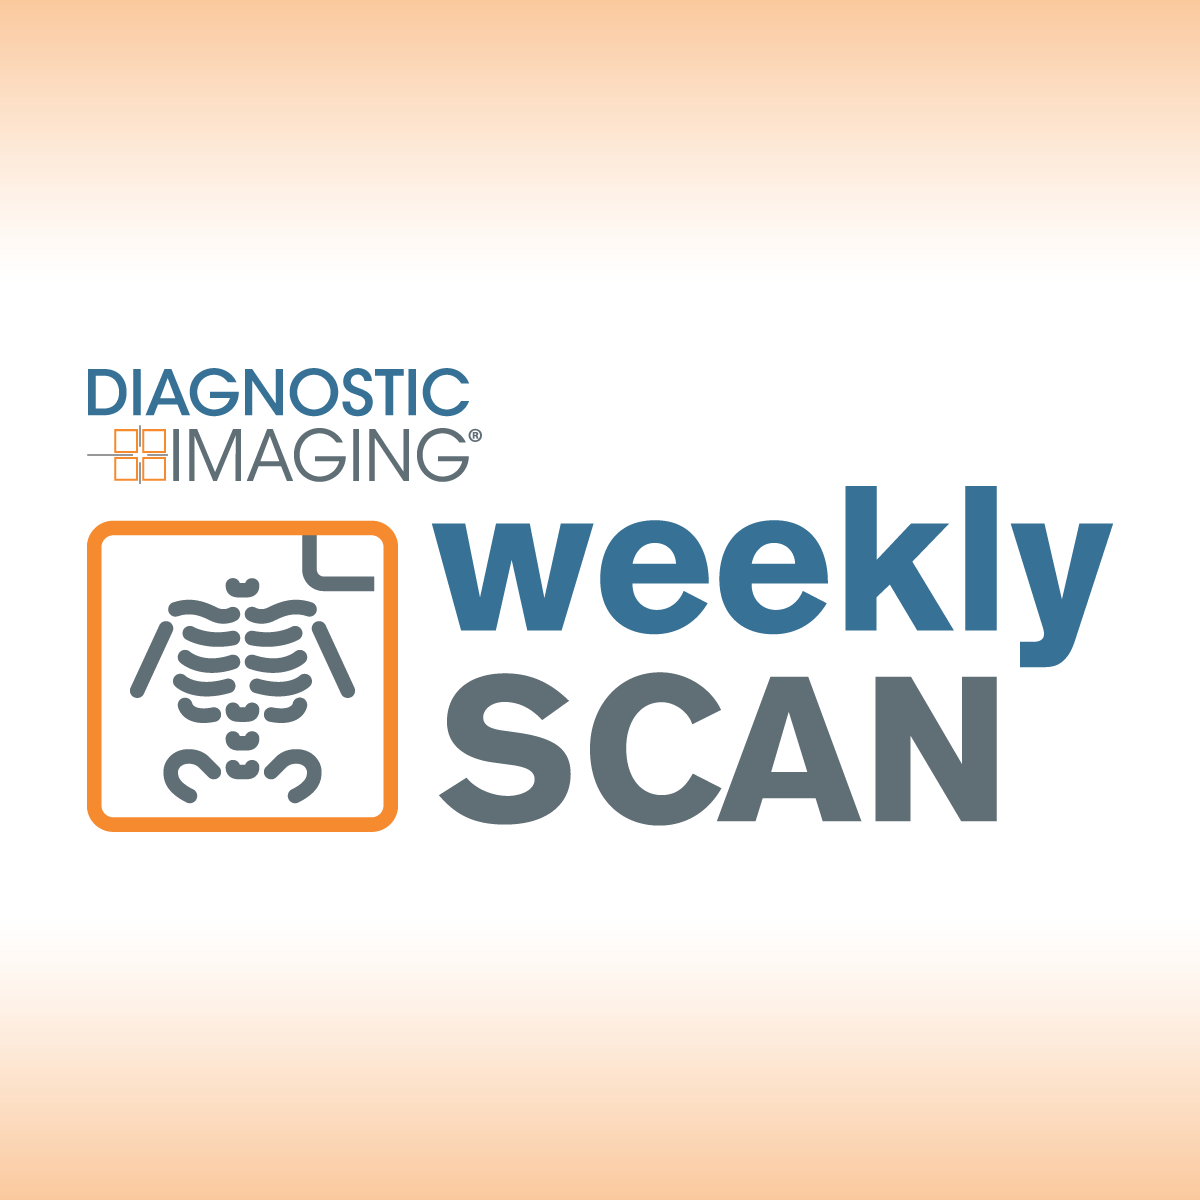 Diagnostic Imaging's Weekly Scan: November 19-November 25